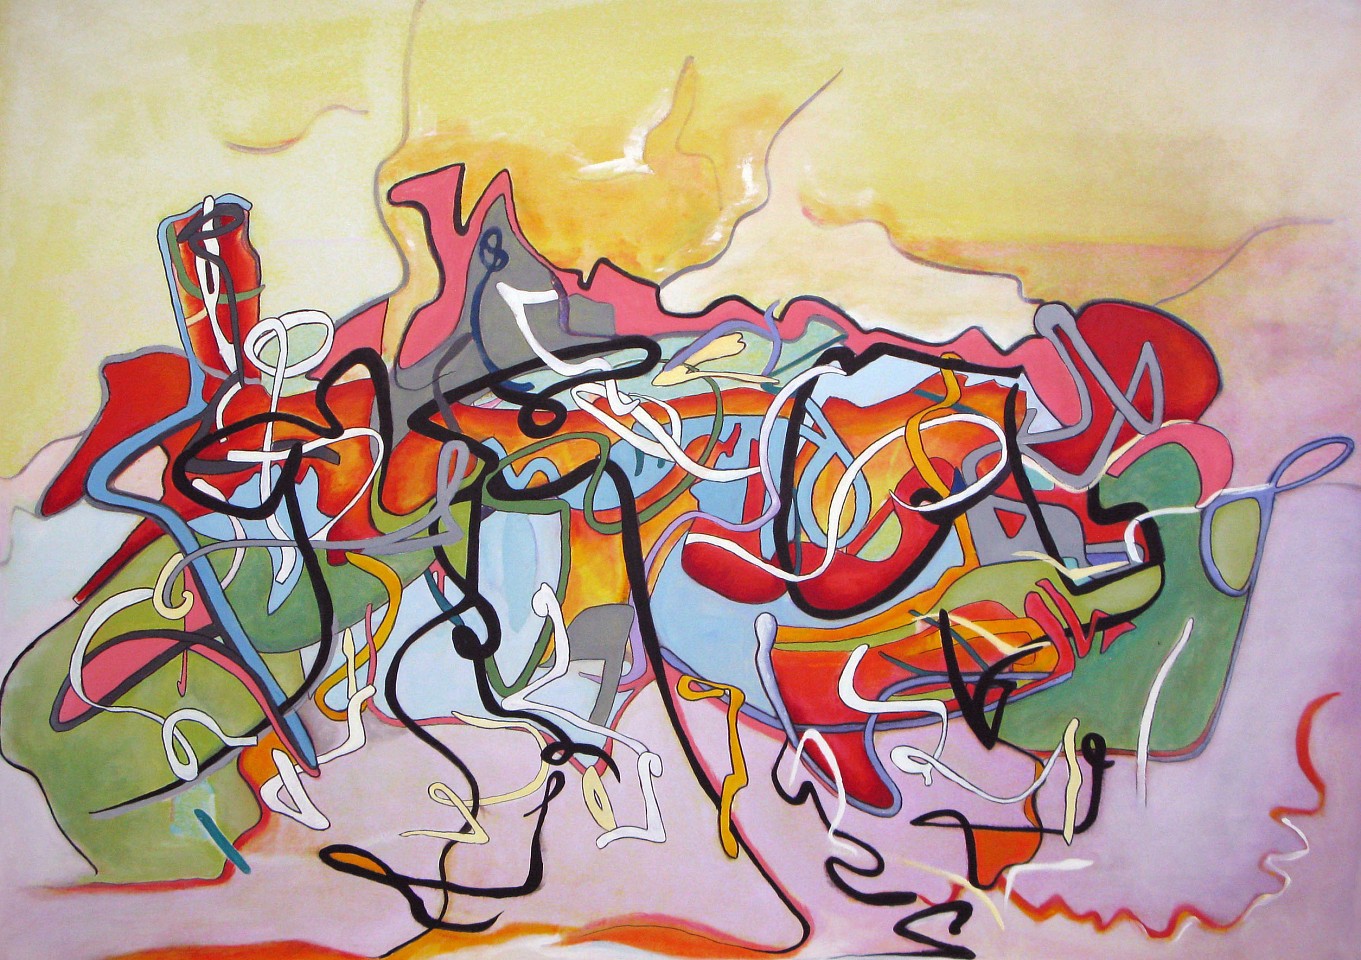 Bill Barrett, Sante Fe Suite, 2011
Acrylic on canvas, 72 x 96 inches
BARR0019